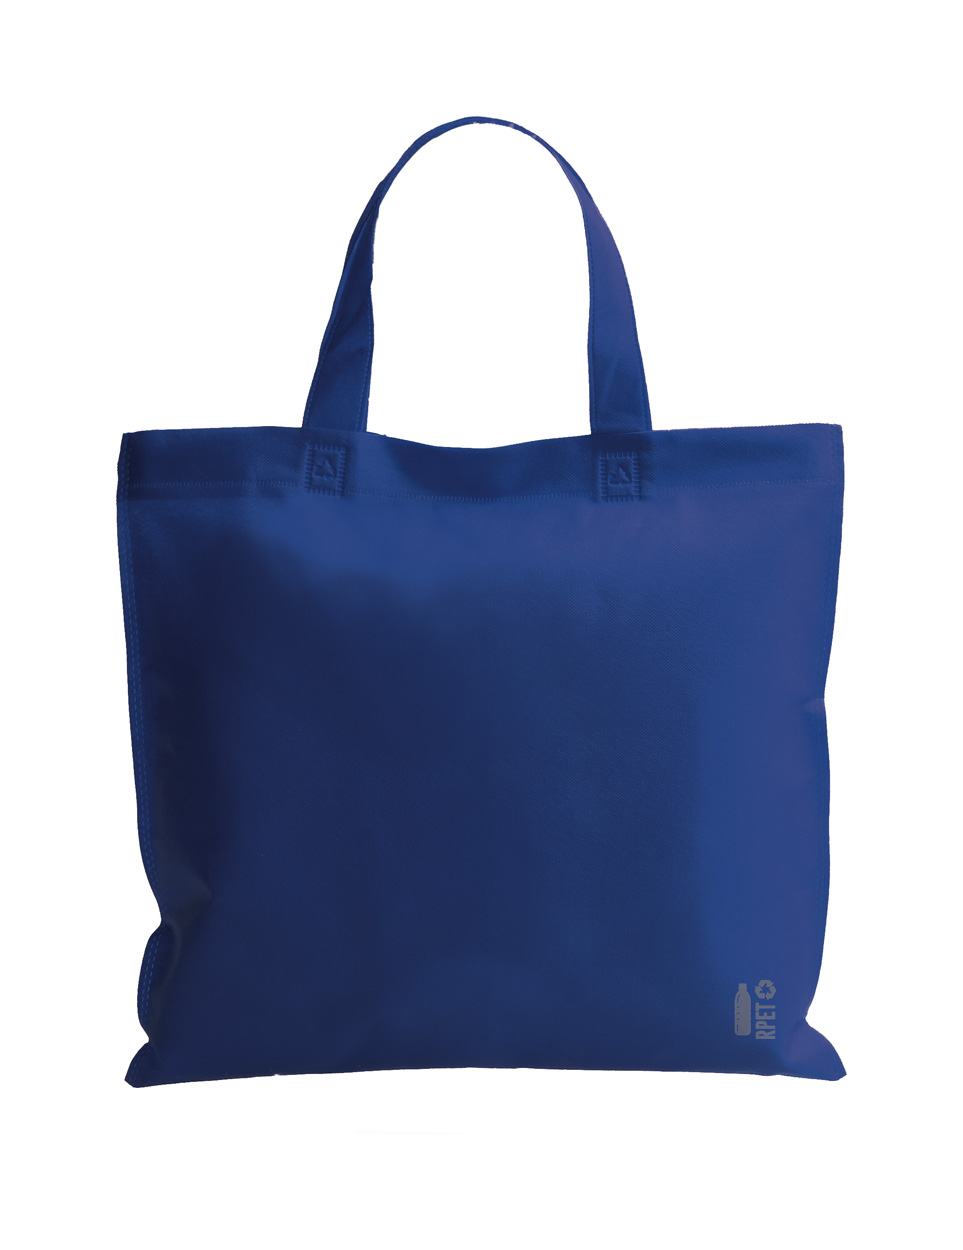 Raduin RPET shopping bag - blue